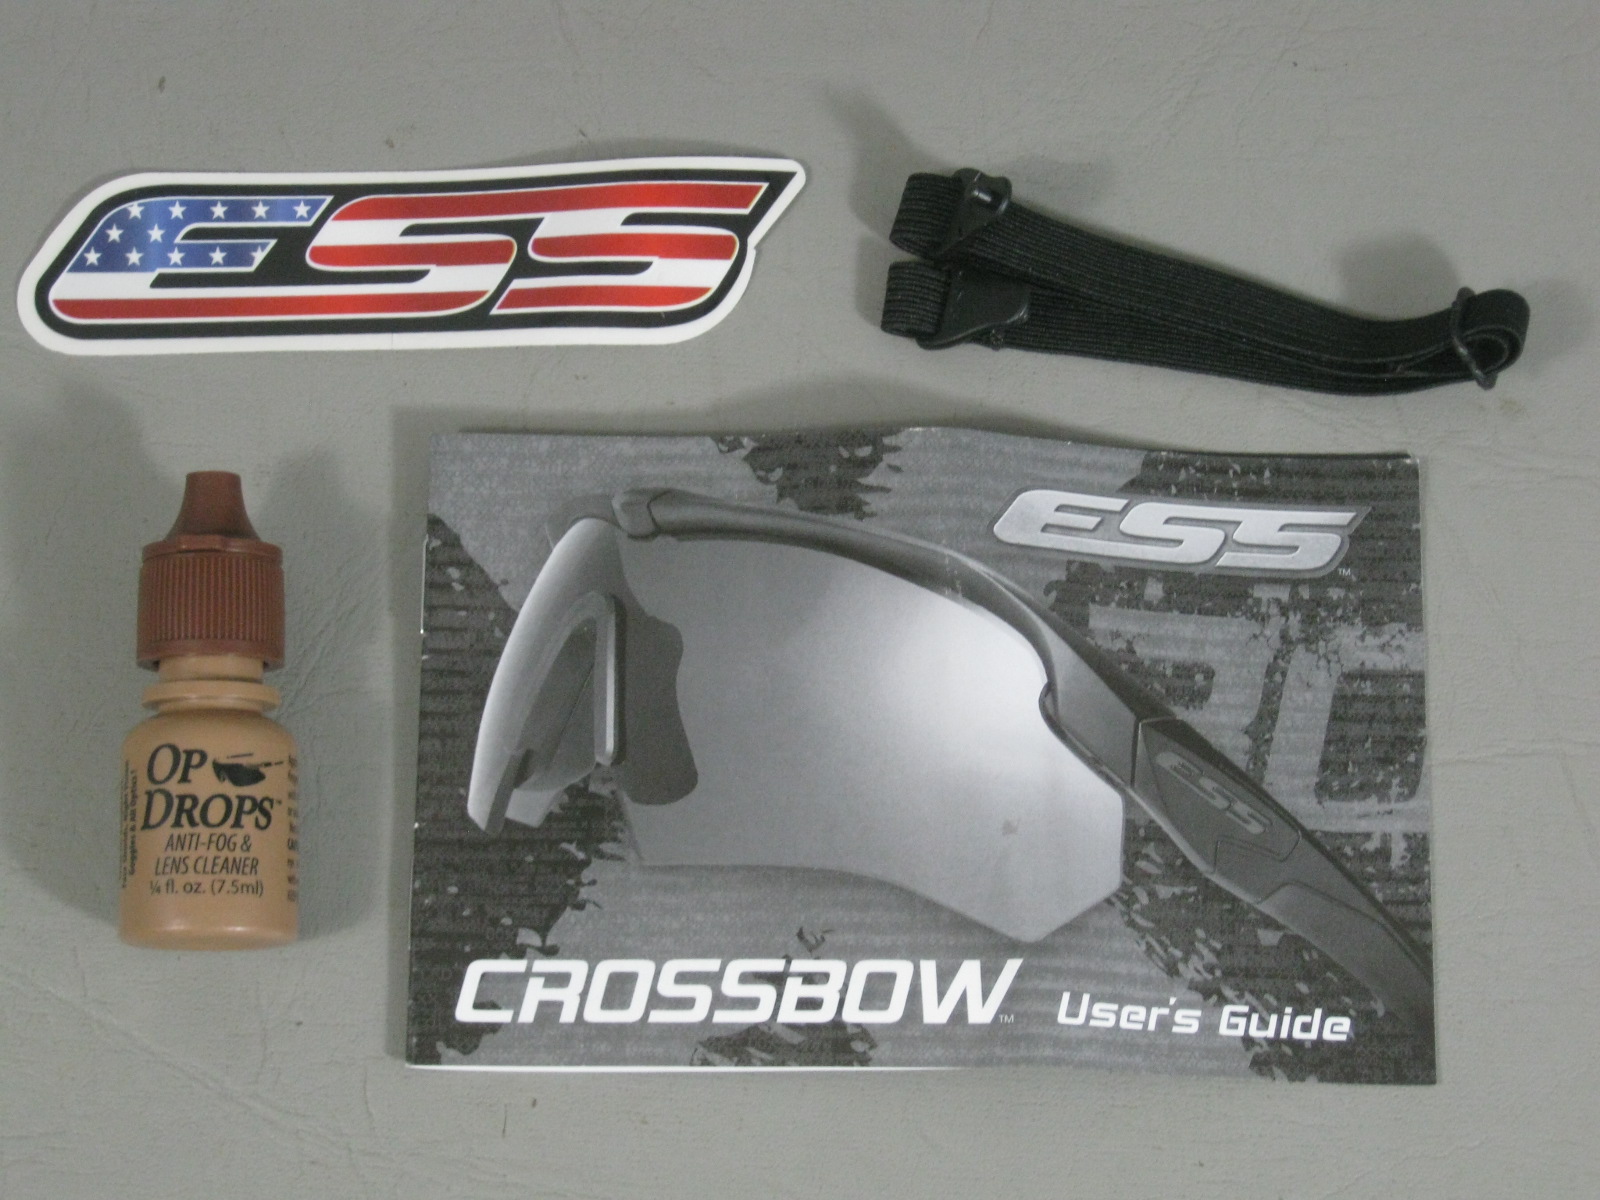 New ESS Crossbow Eyeshield Sunglasses 2 Lenses W/Case Military Law Enforcement 7